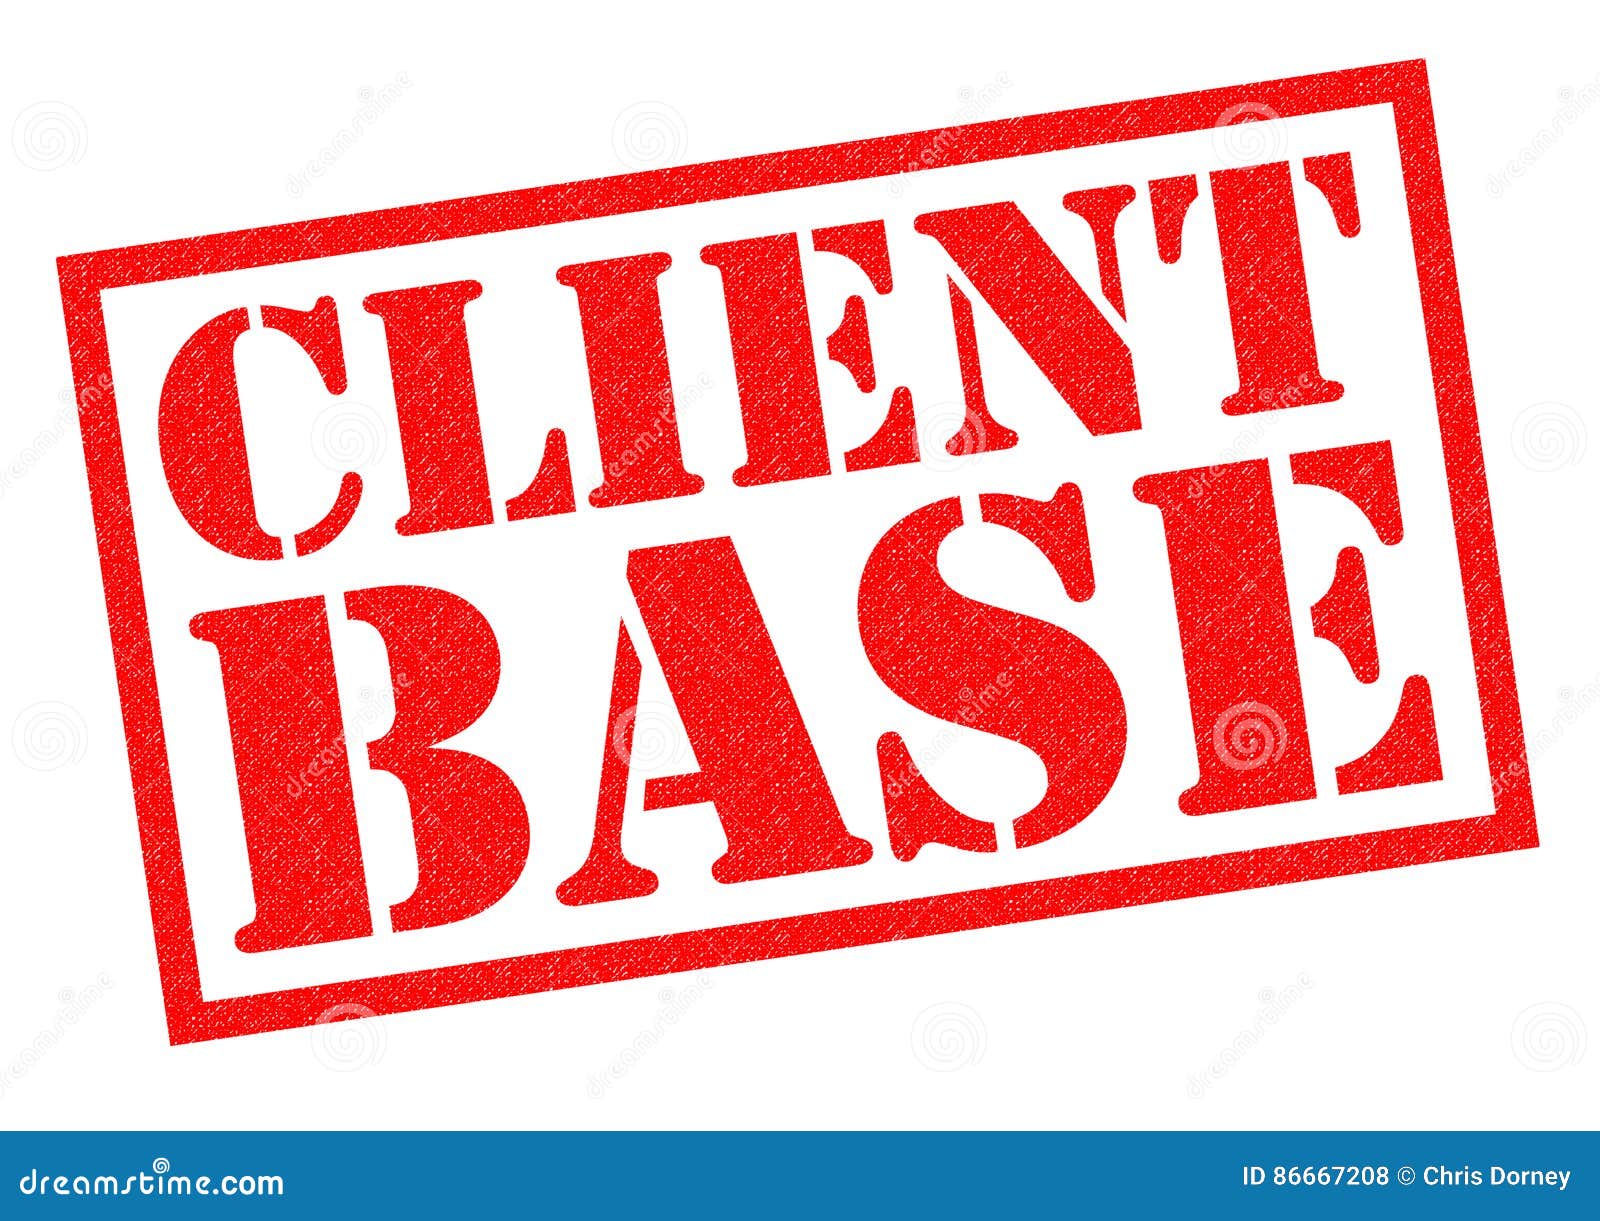 client base icon